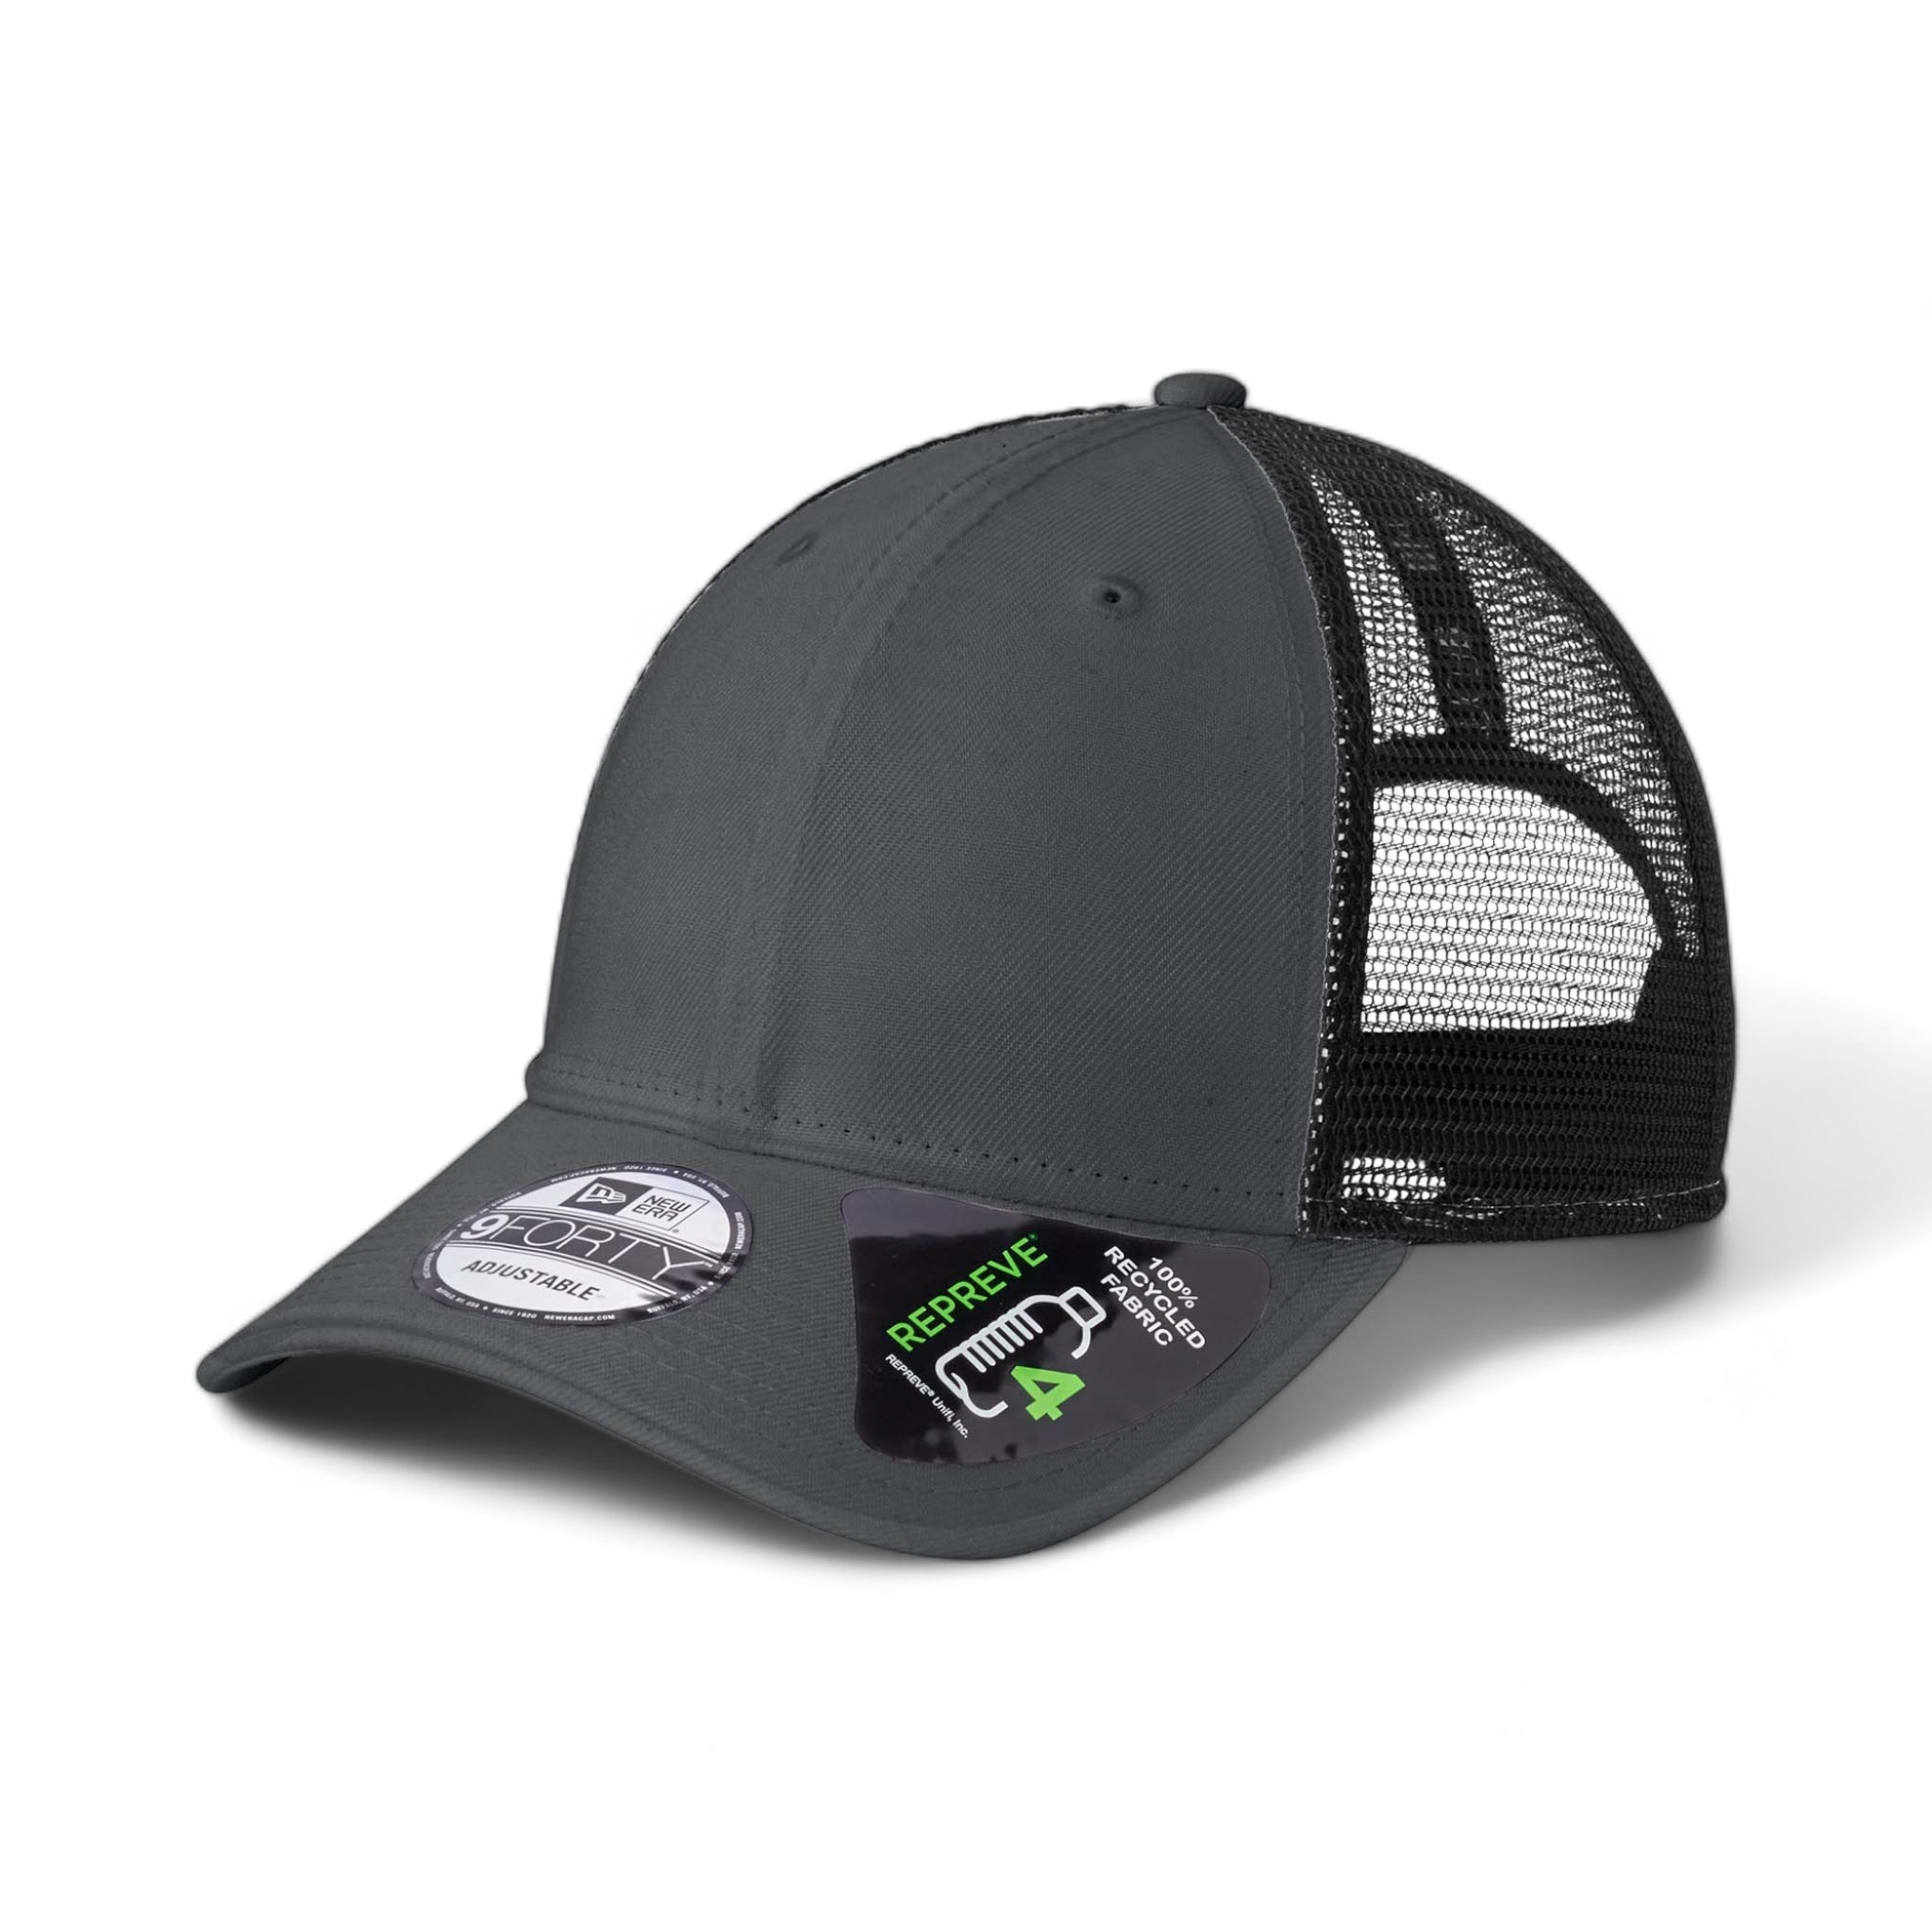 Side view of New Era NE208 custom hat in graphite